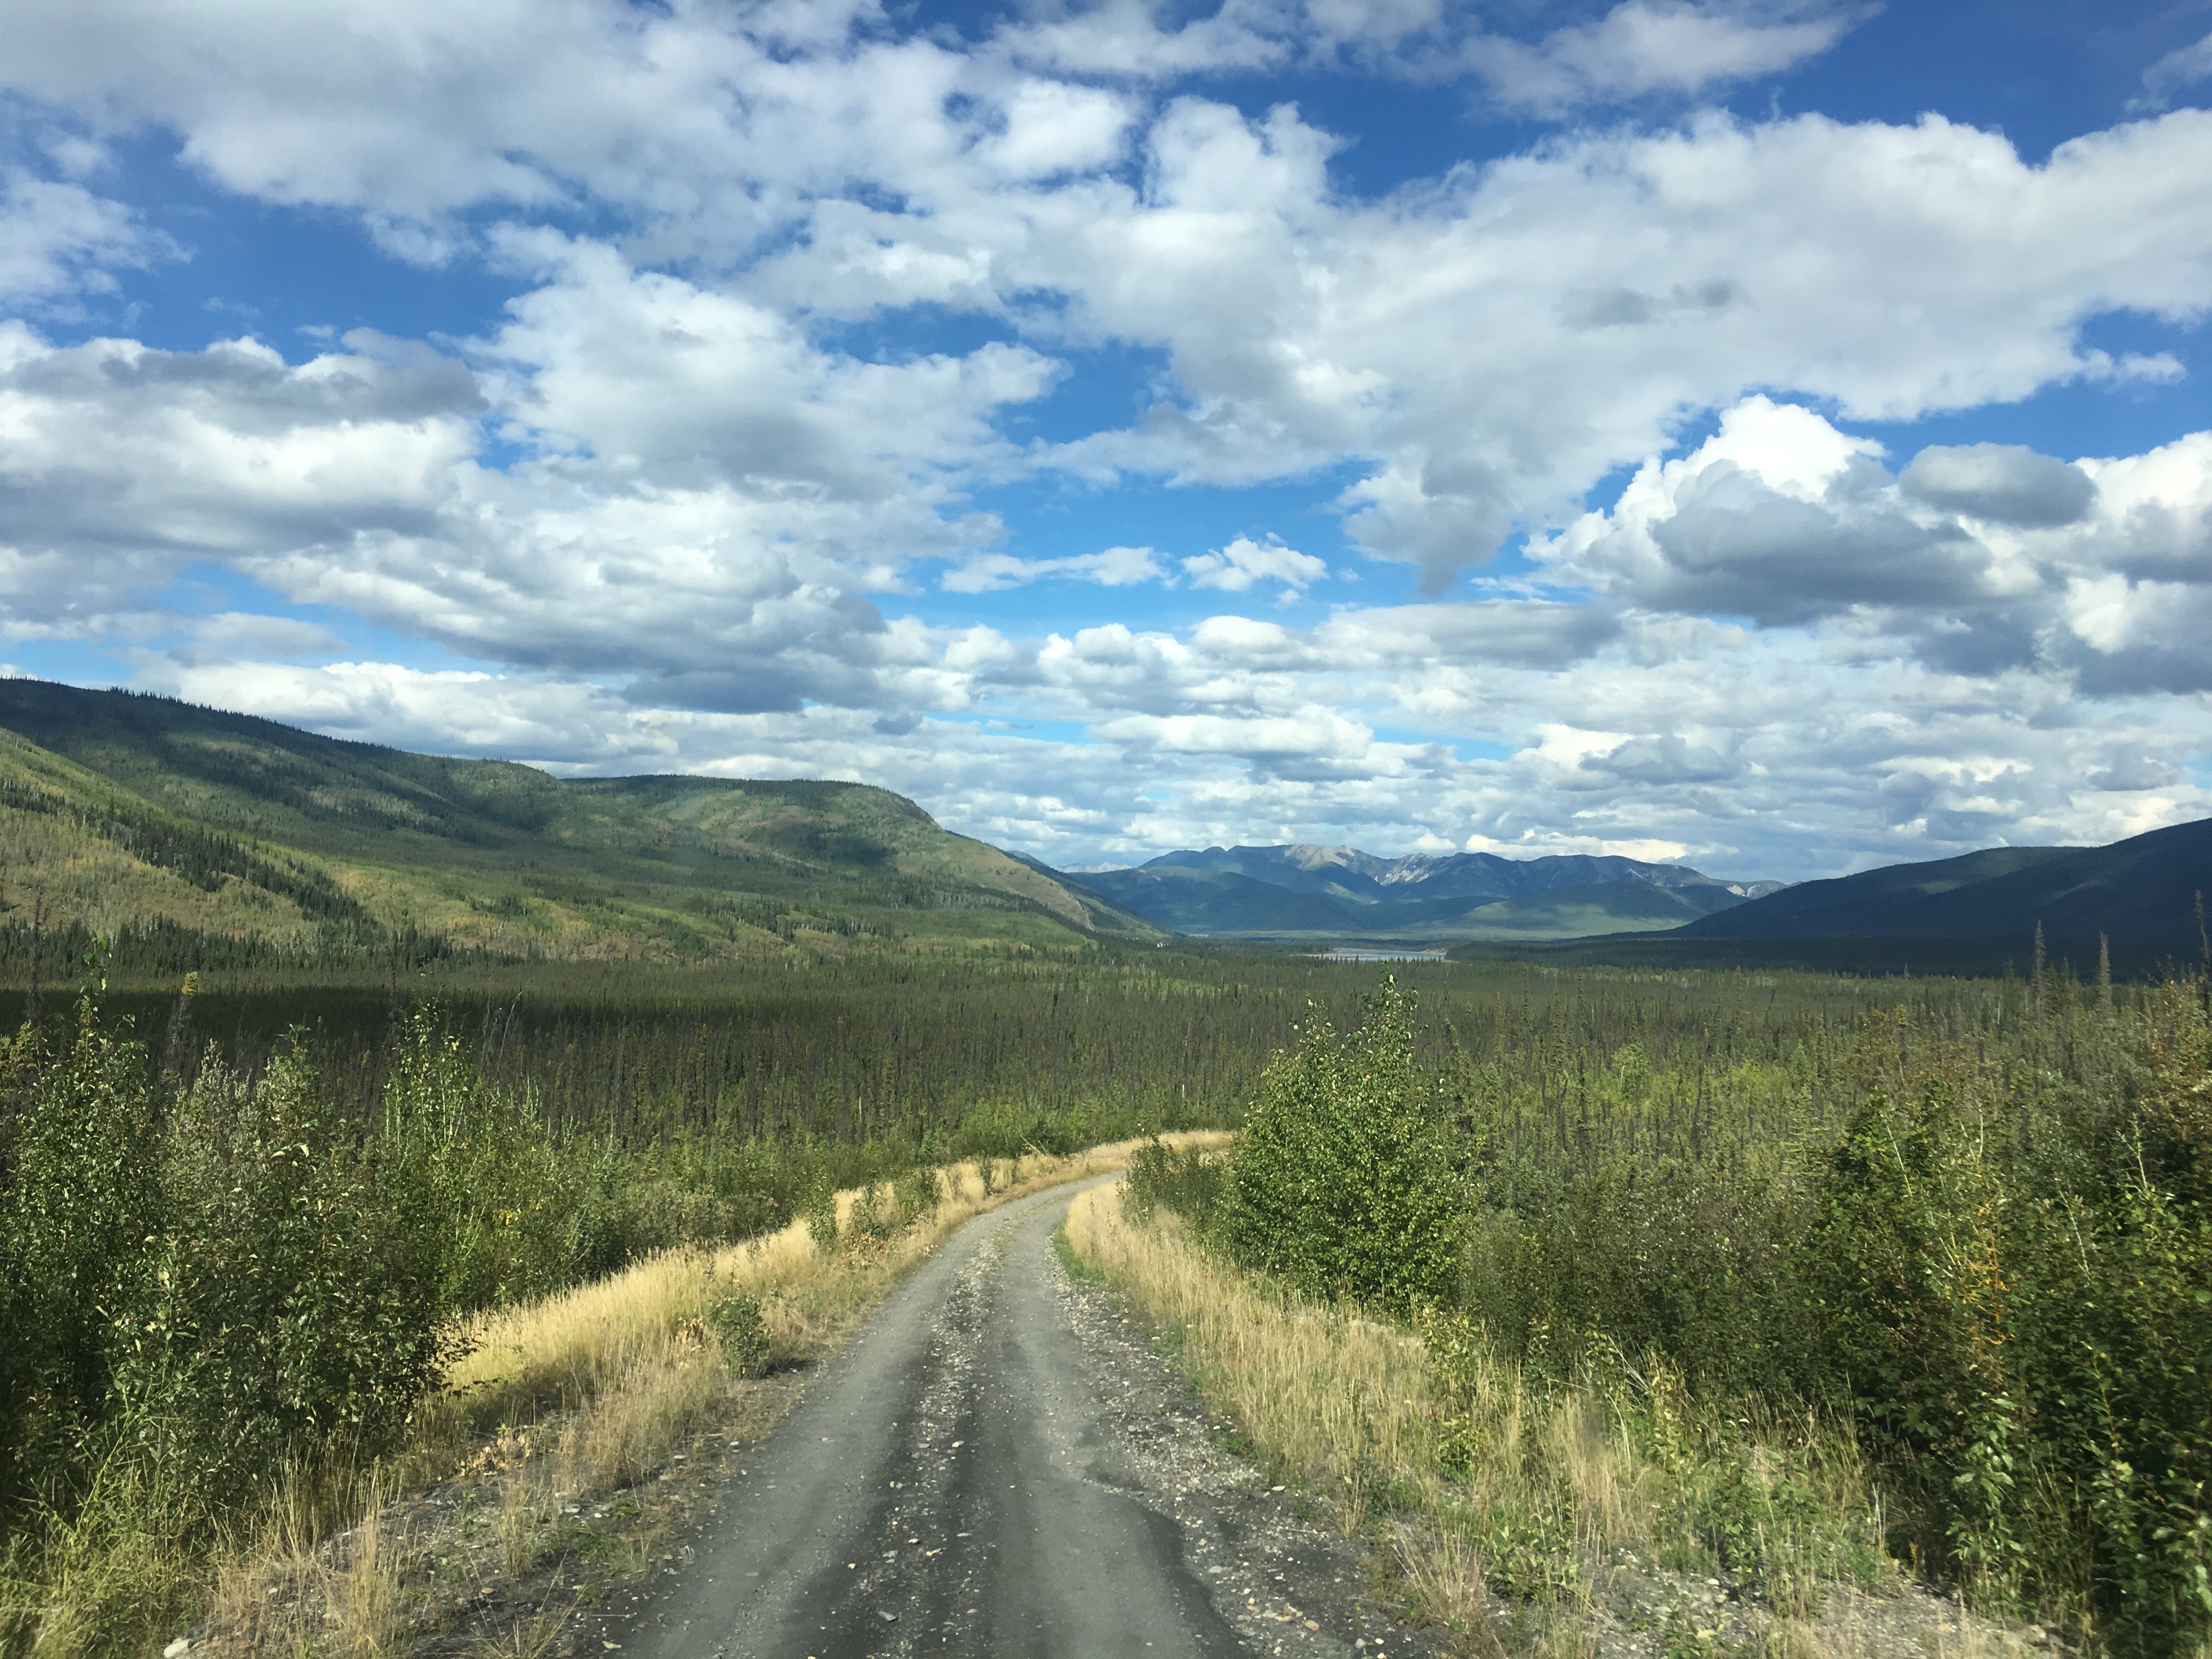 The road towards 40 Mile Post, Yukon